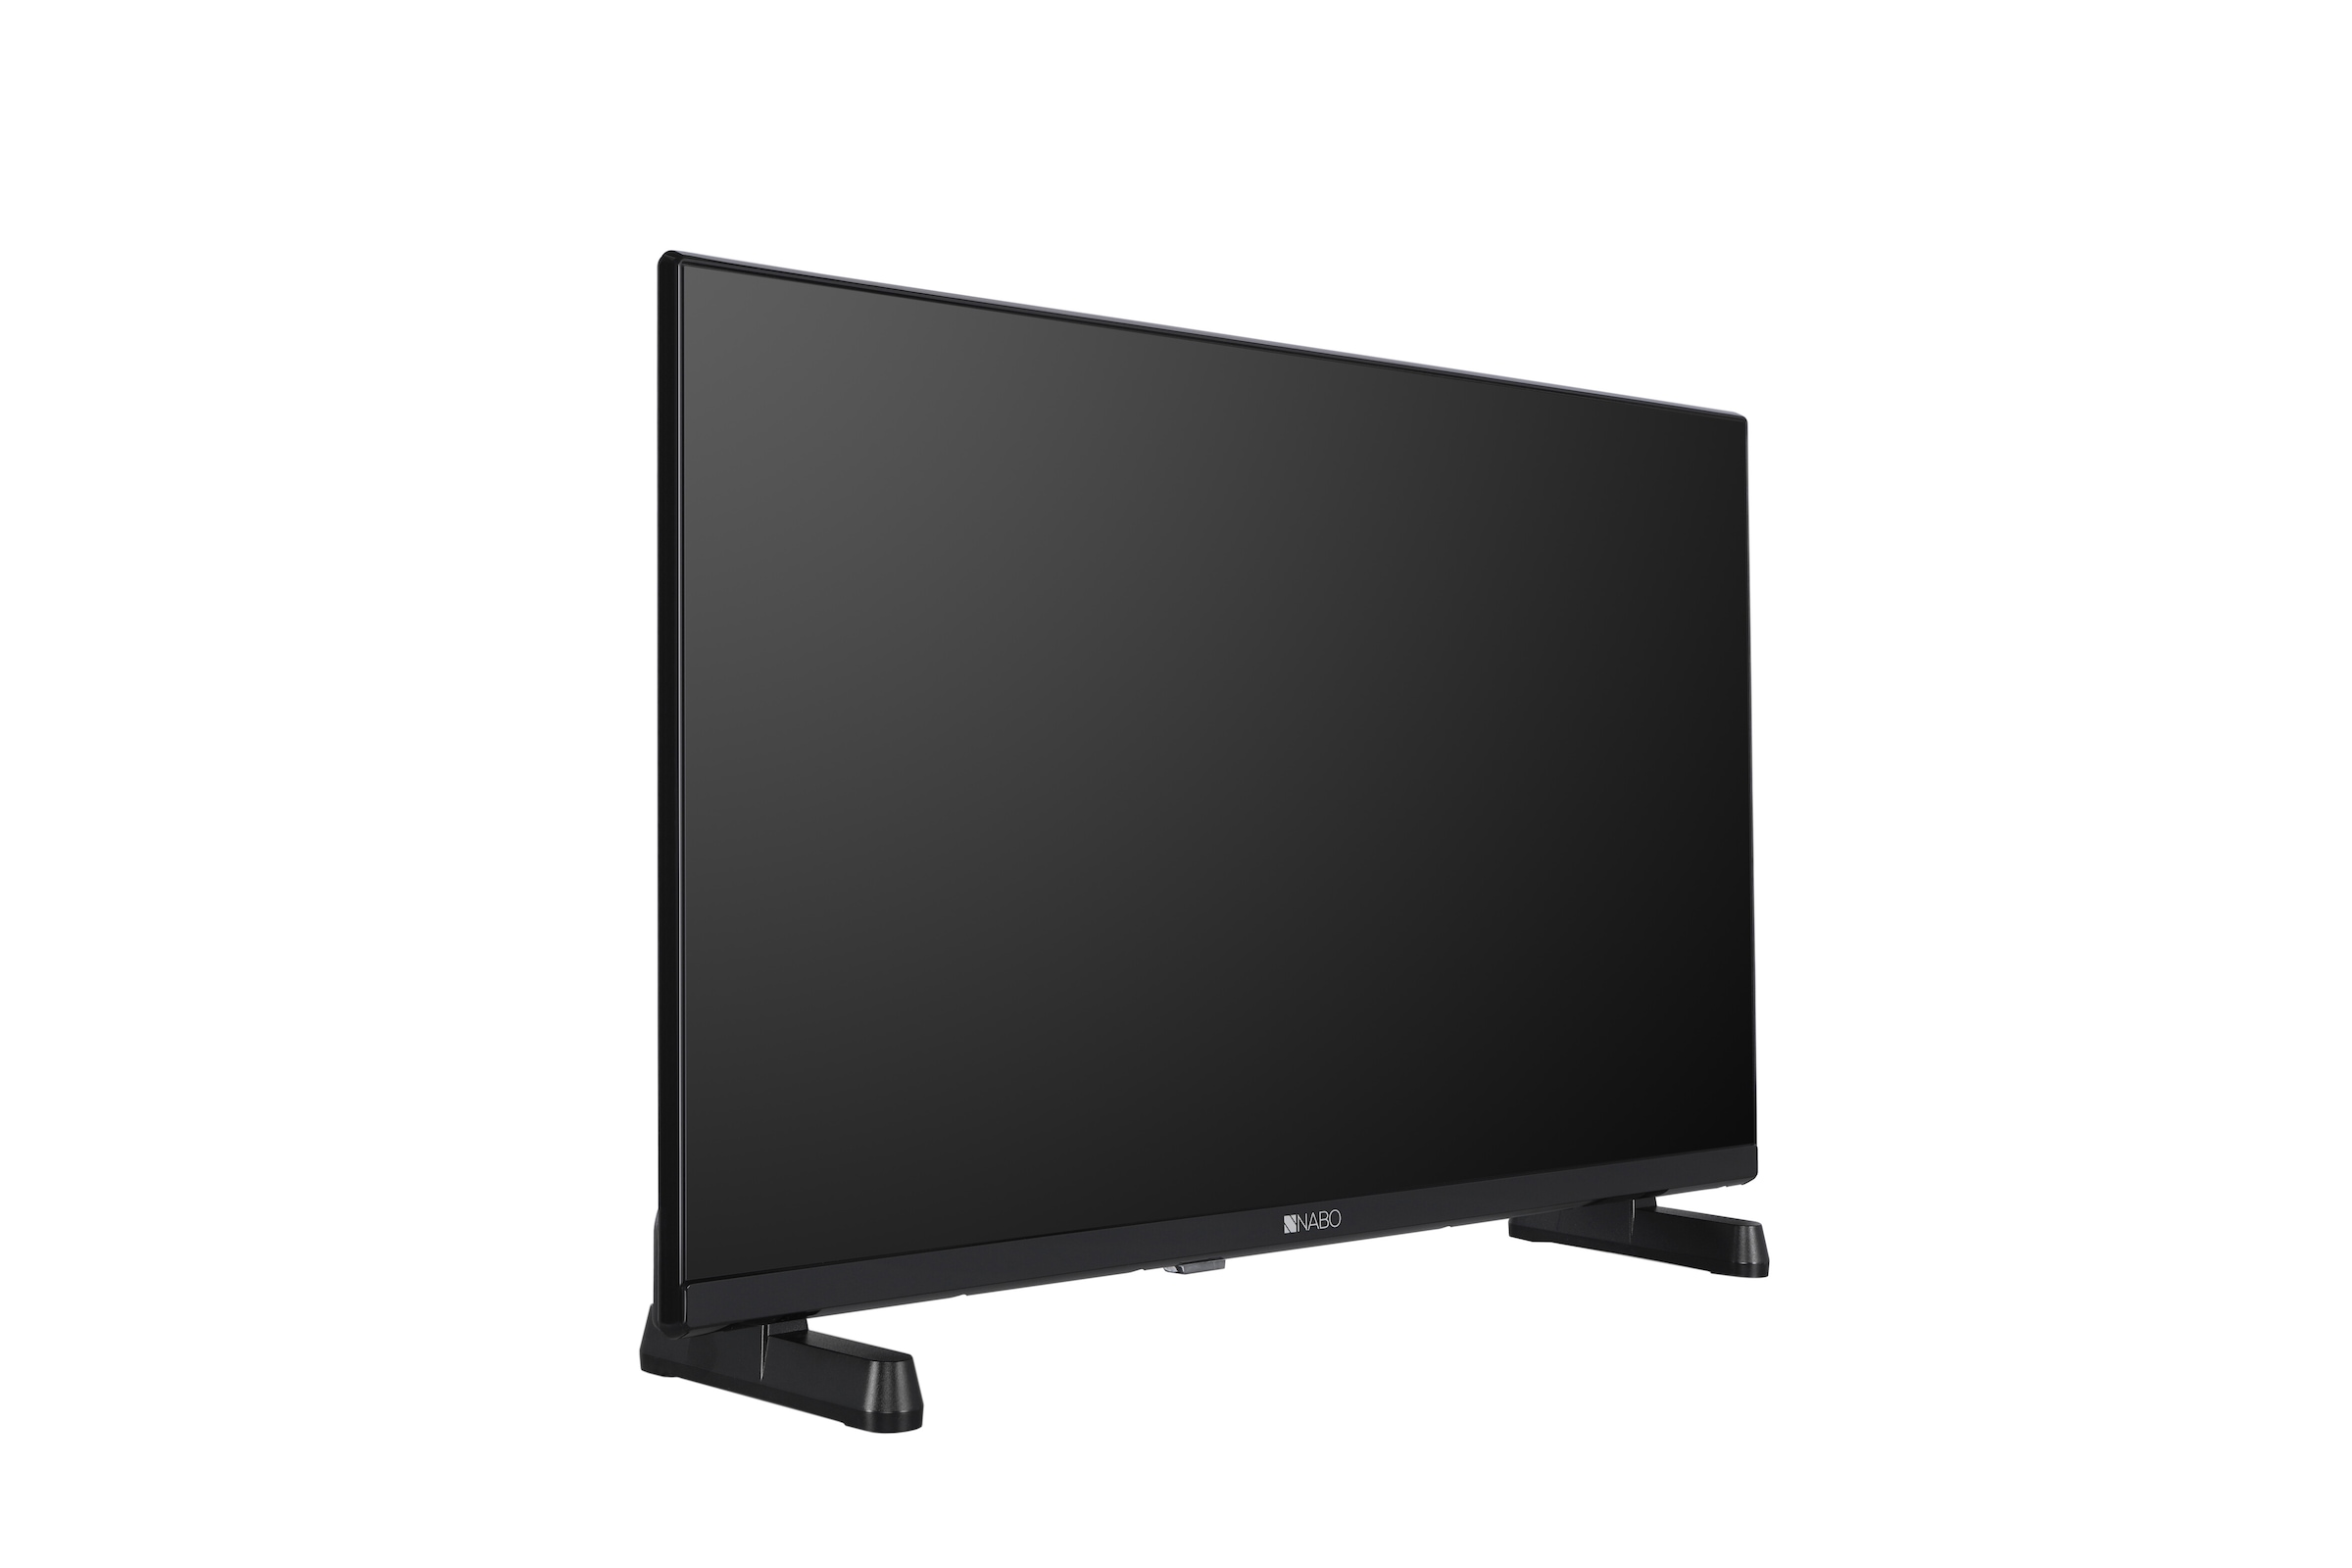 NABO LED-Fernseher »32 LX4000«, 80 cm/32 Zoll, HD ready, Smart-TV